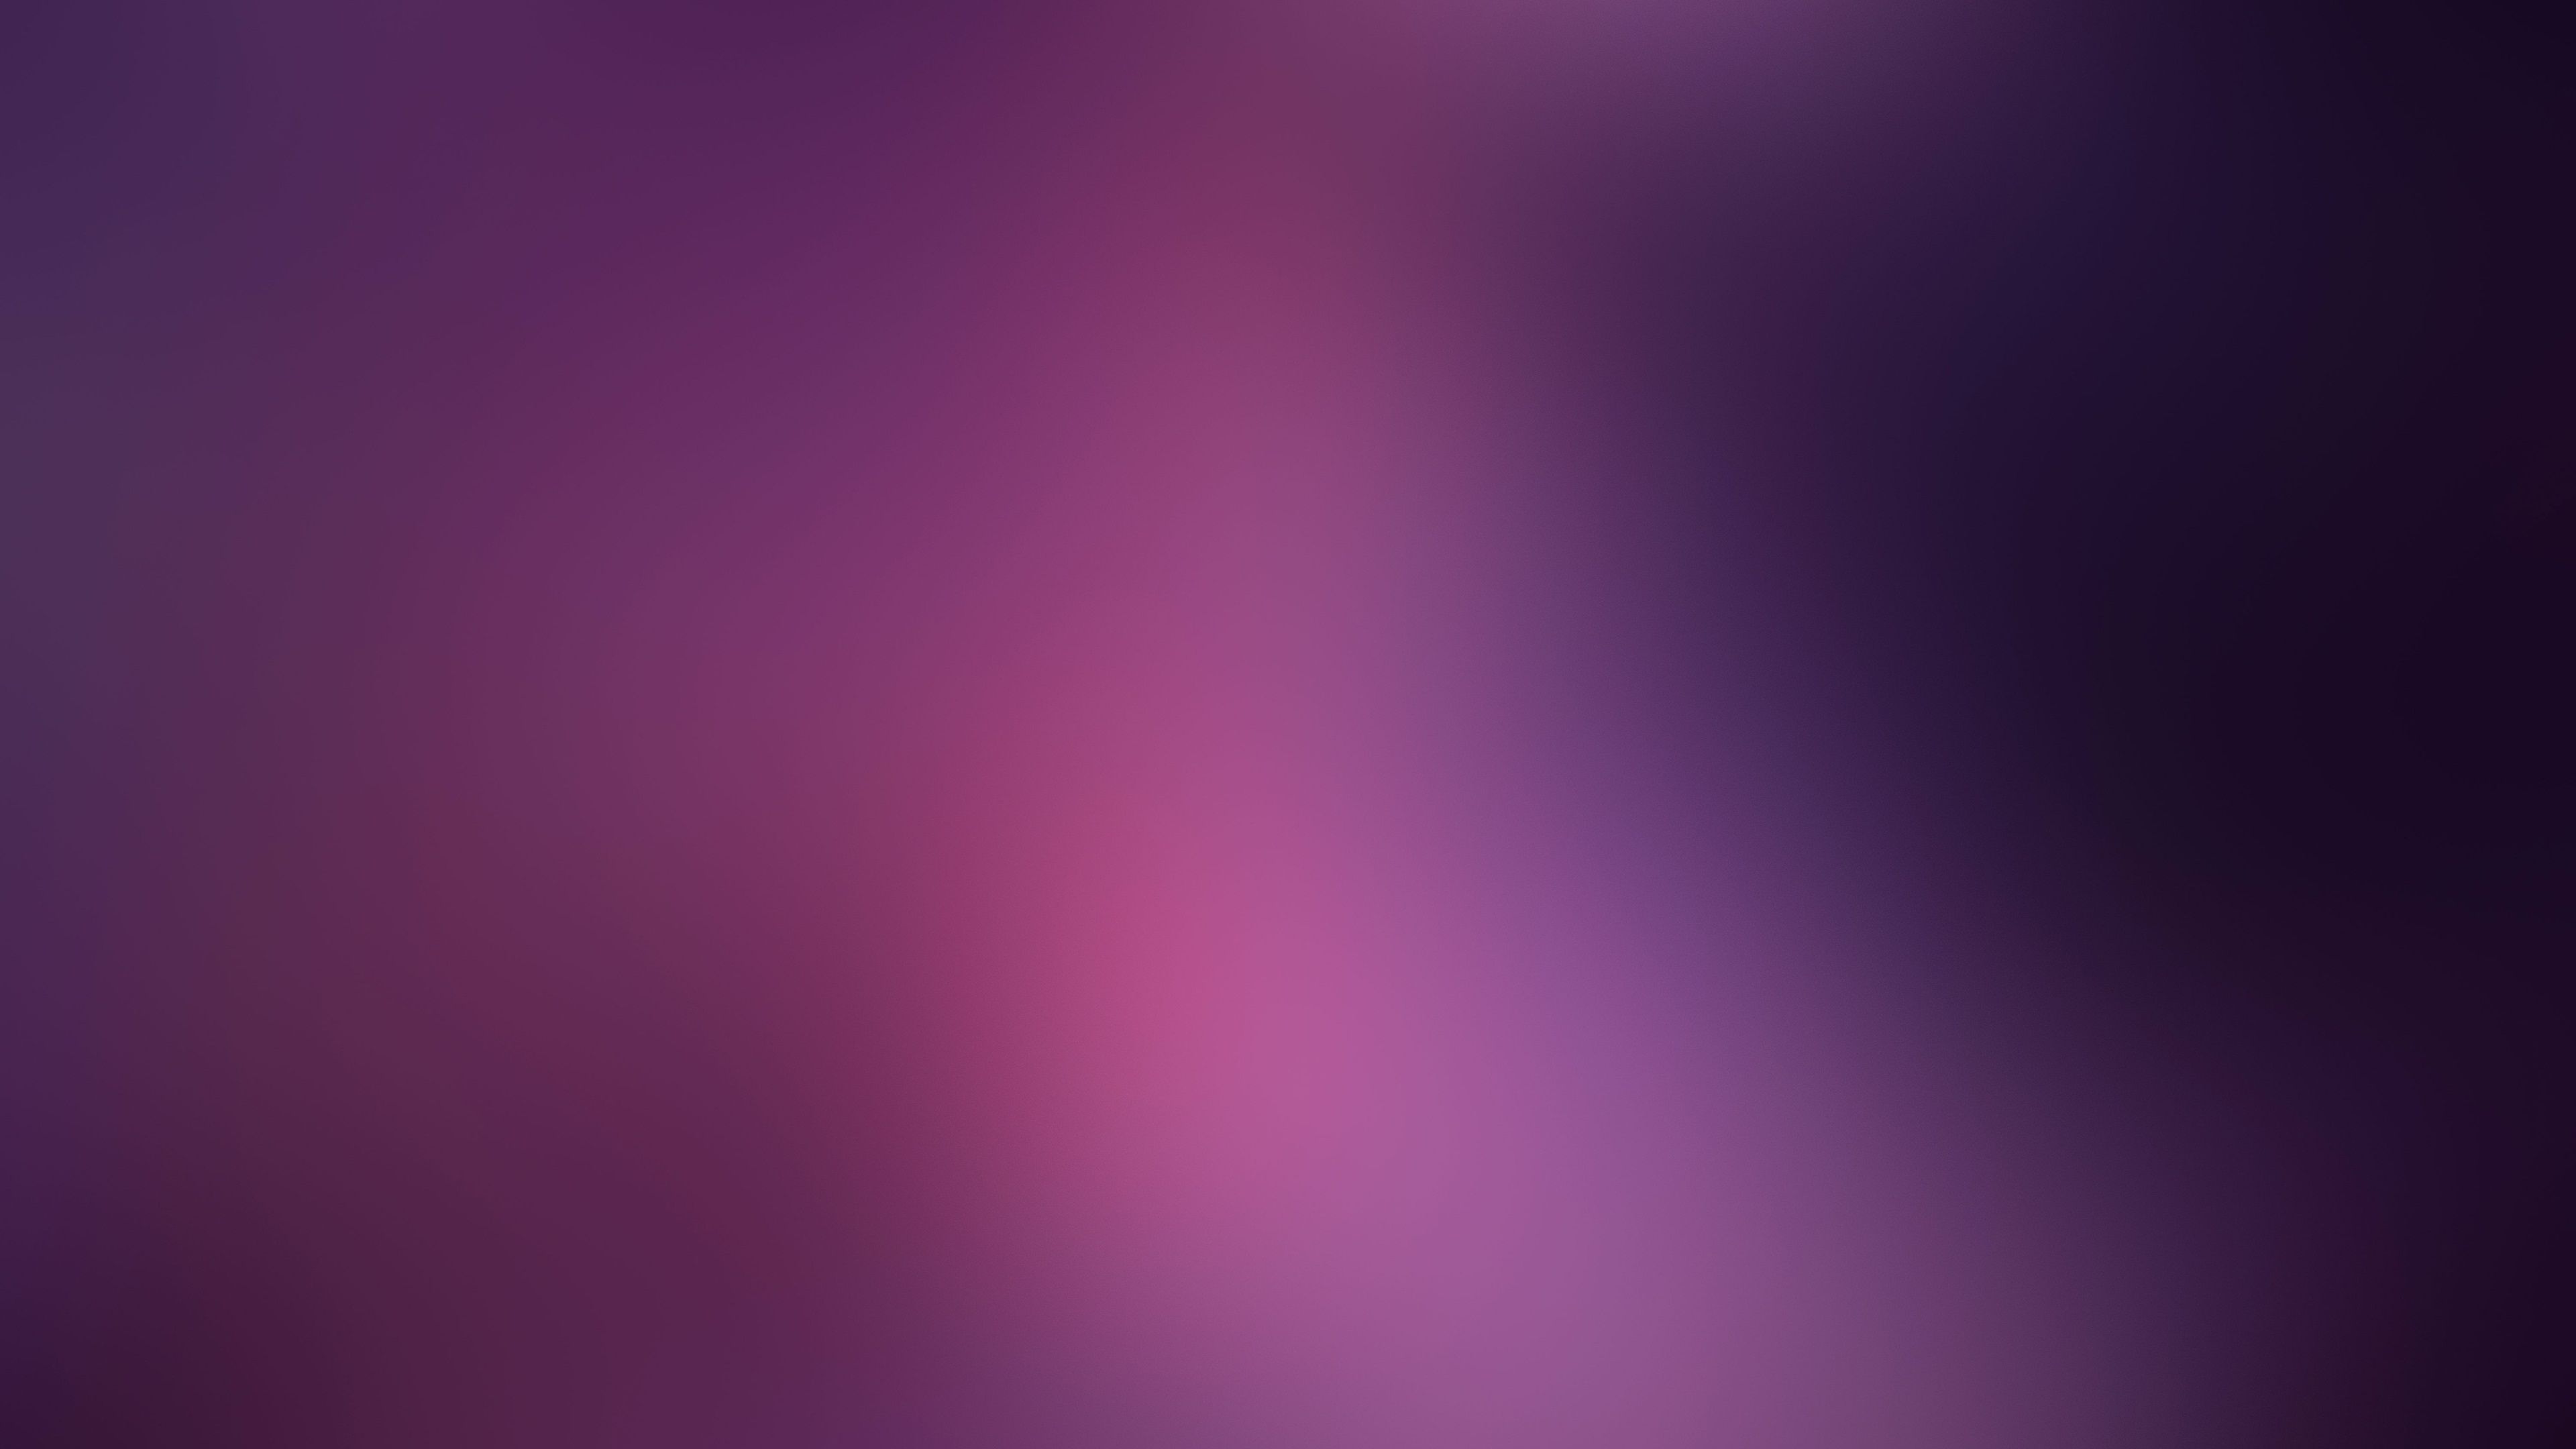 4K Plain Blurred Background HD Desktop Wallpaper 40962